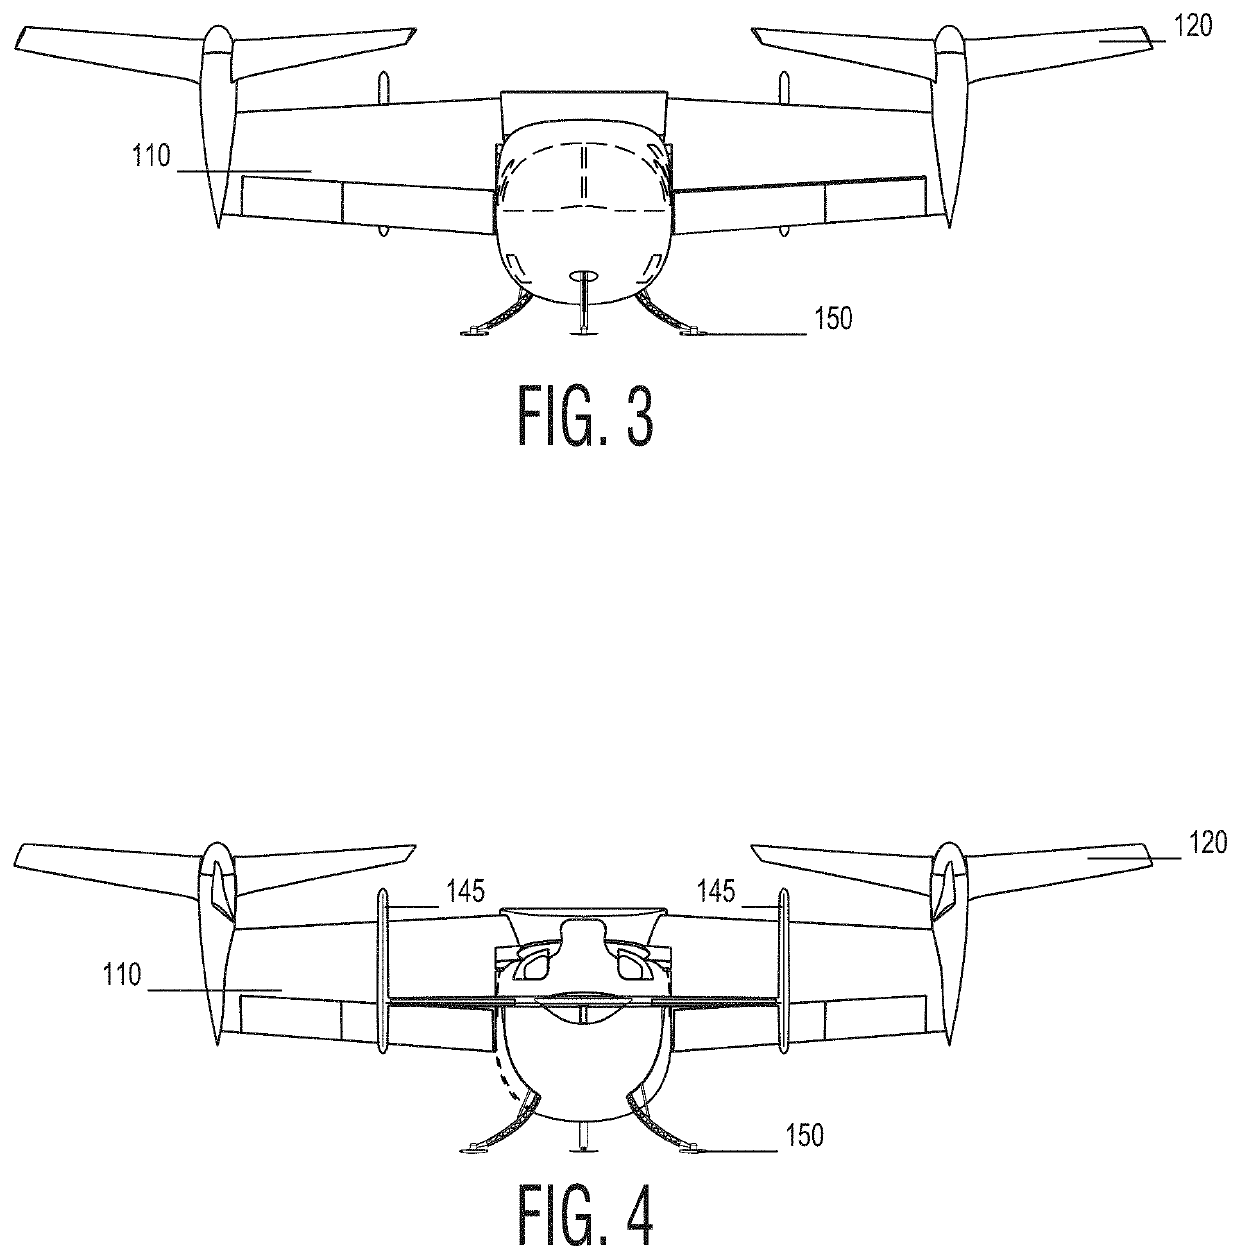 Vertical take-off and landing (VTOL) tilt-wing passenger aircraft